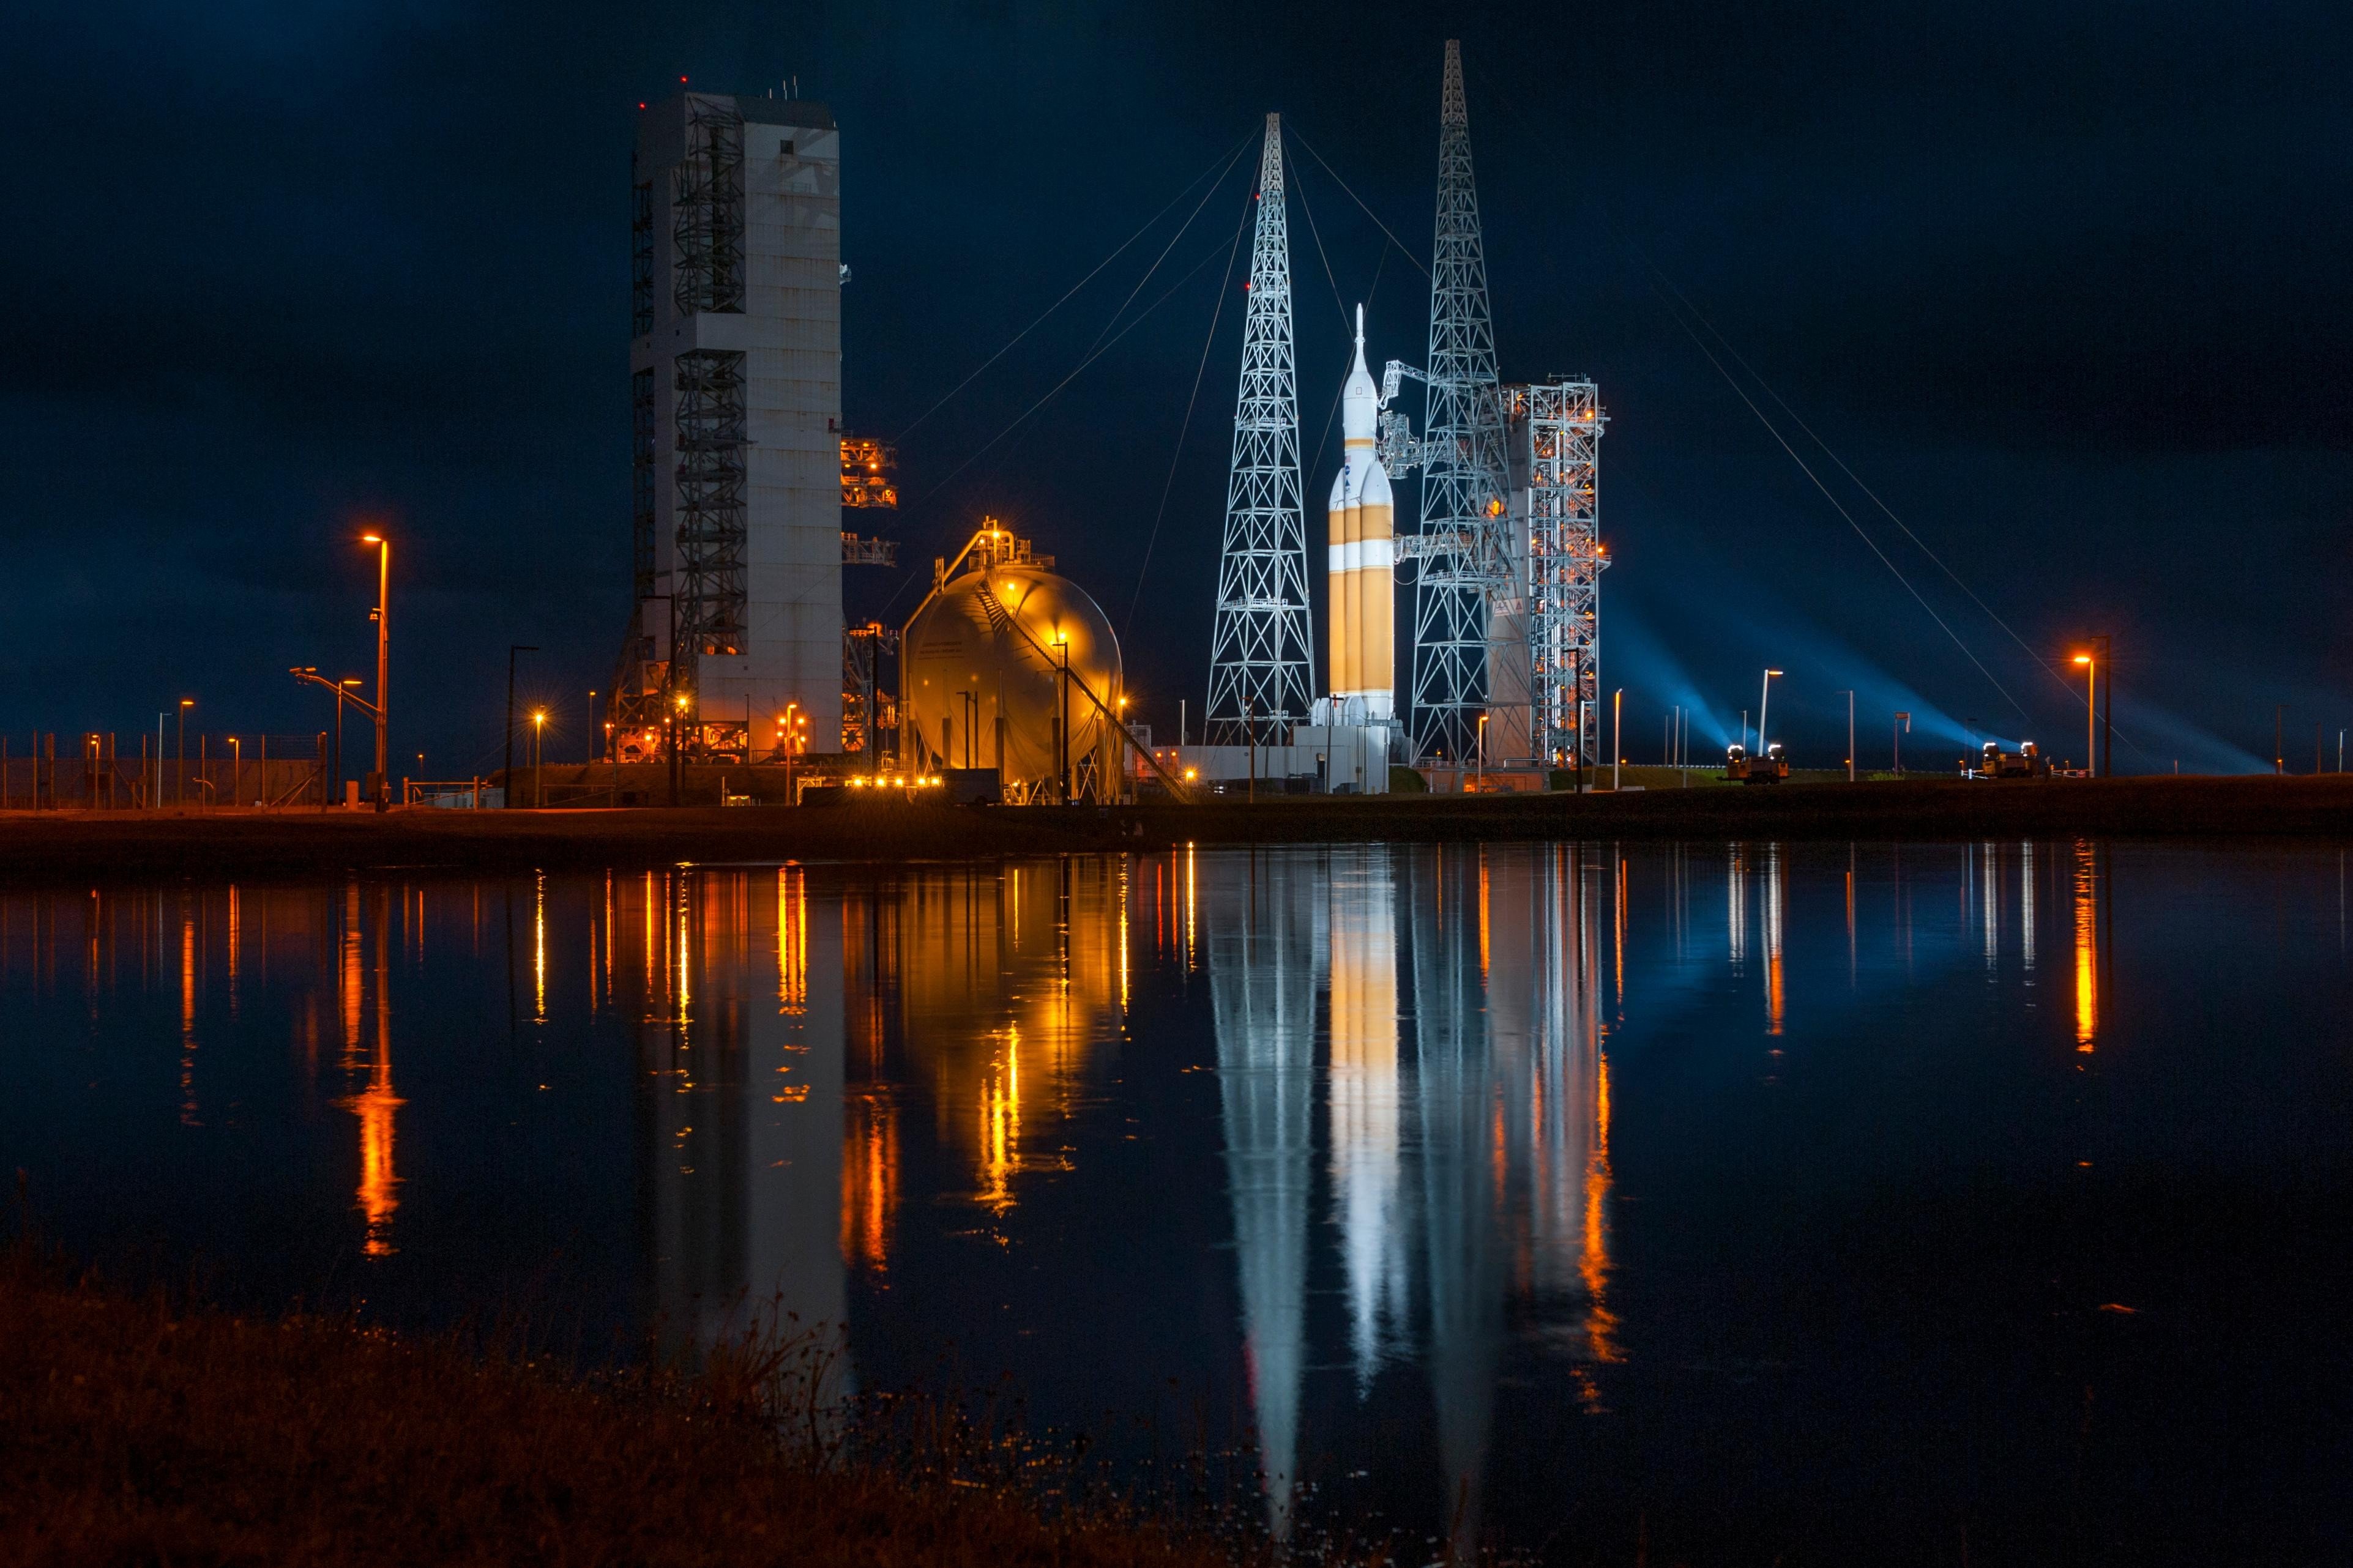 rocket, Launch, Space, Lake, Water, Reflection, NASA Wallpaper